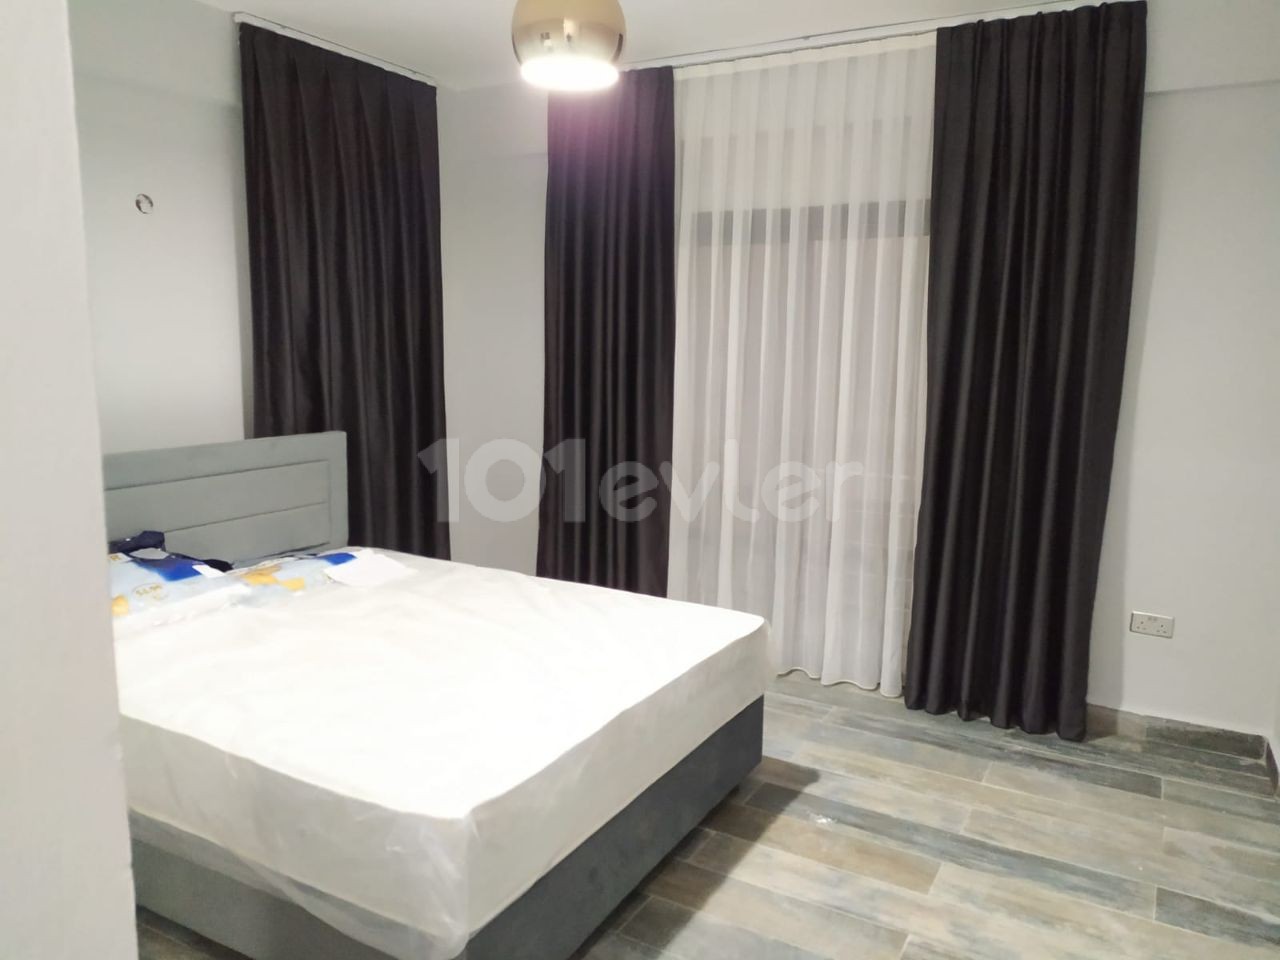 Luxury 3 bedroom ensuite villa in kyrenia center for rent 